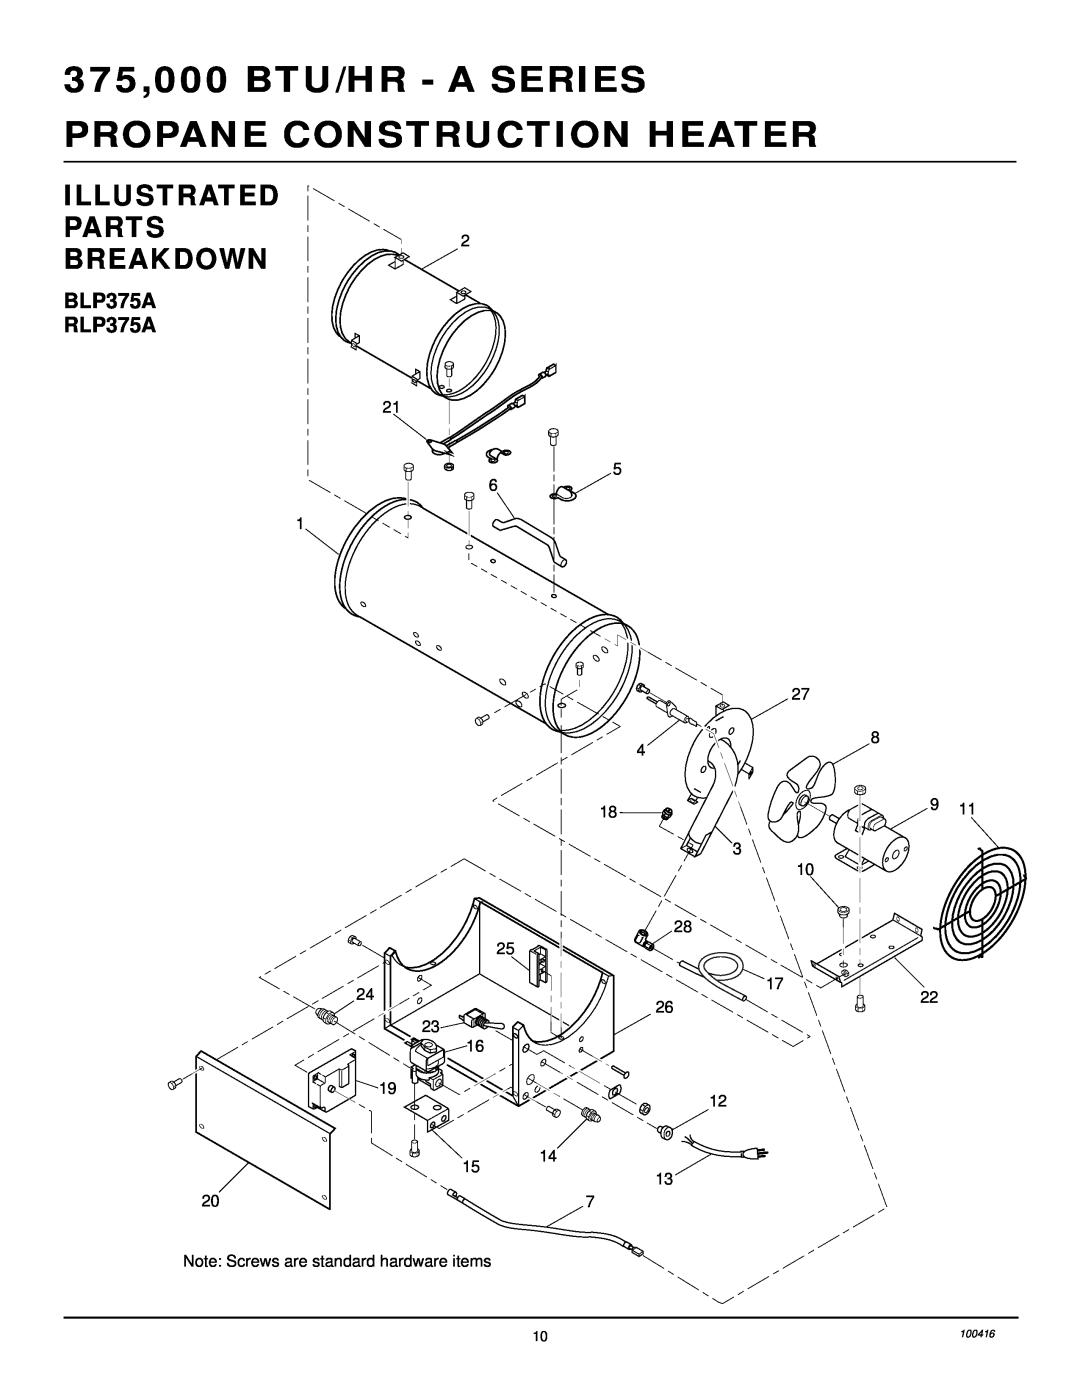 Desa owner manual Illustrated Parts, Breakdown, 375,000 BTU/HR - A SERIES, Propane Construction Heater, BLP375A RLP375A 